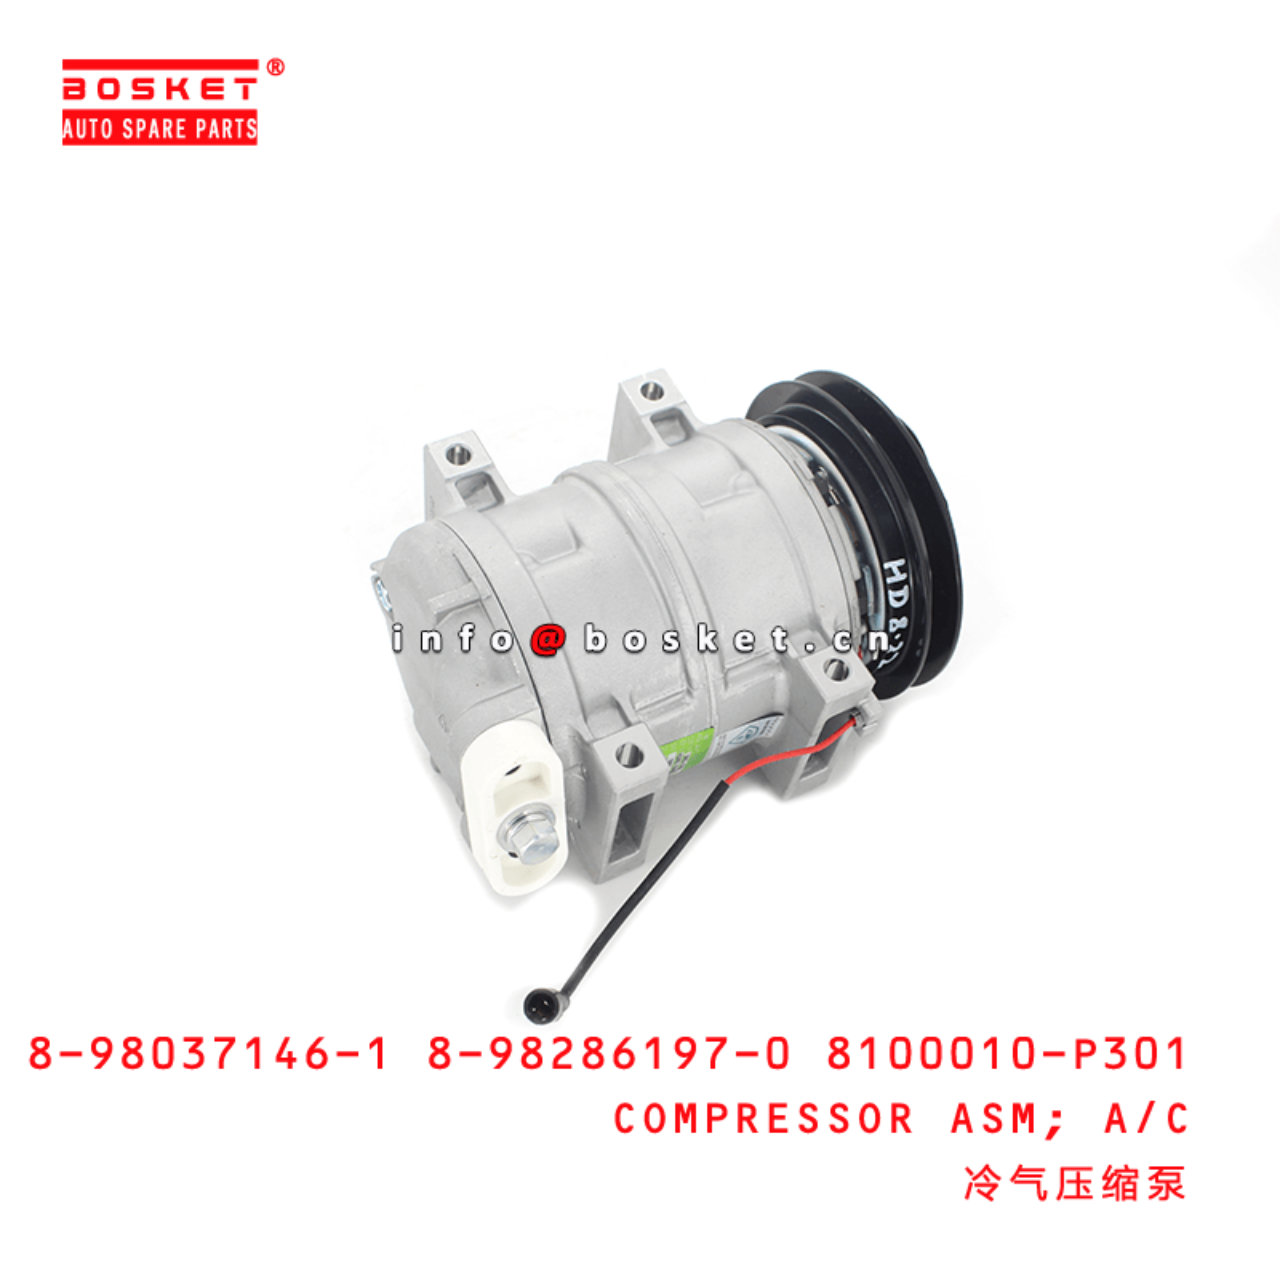 8-98037146-1 8-98286197-0 8100010-P301 Air Compression Compressor 